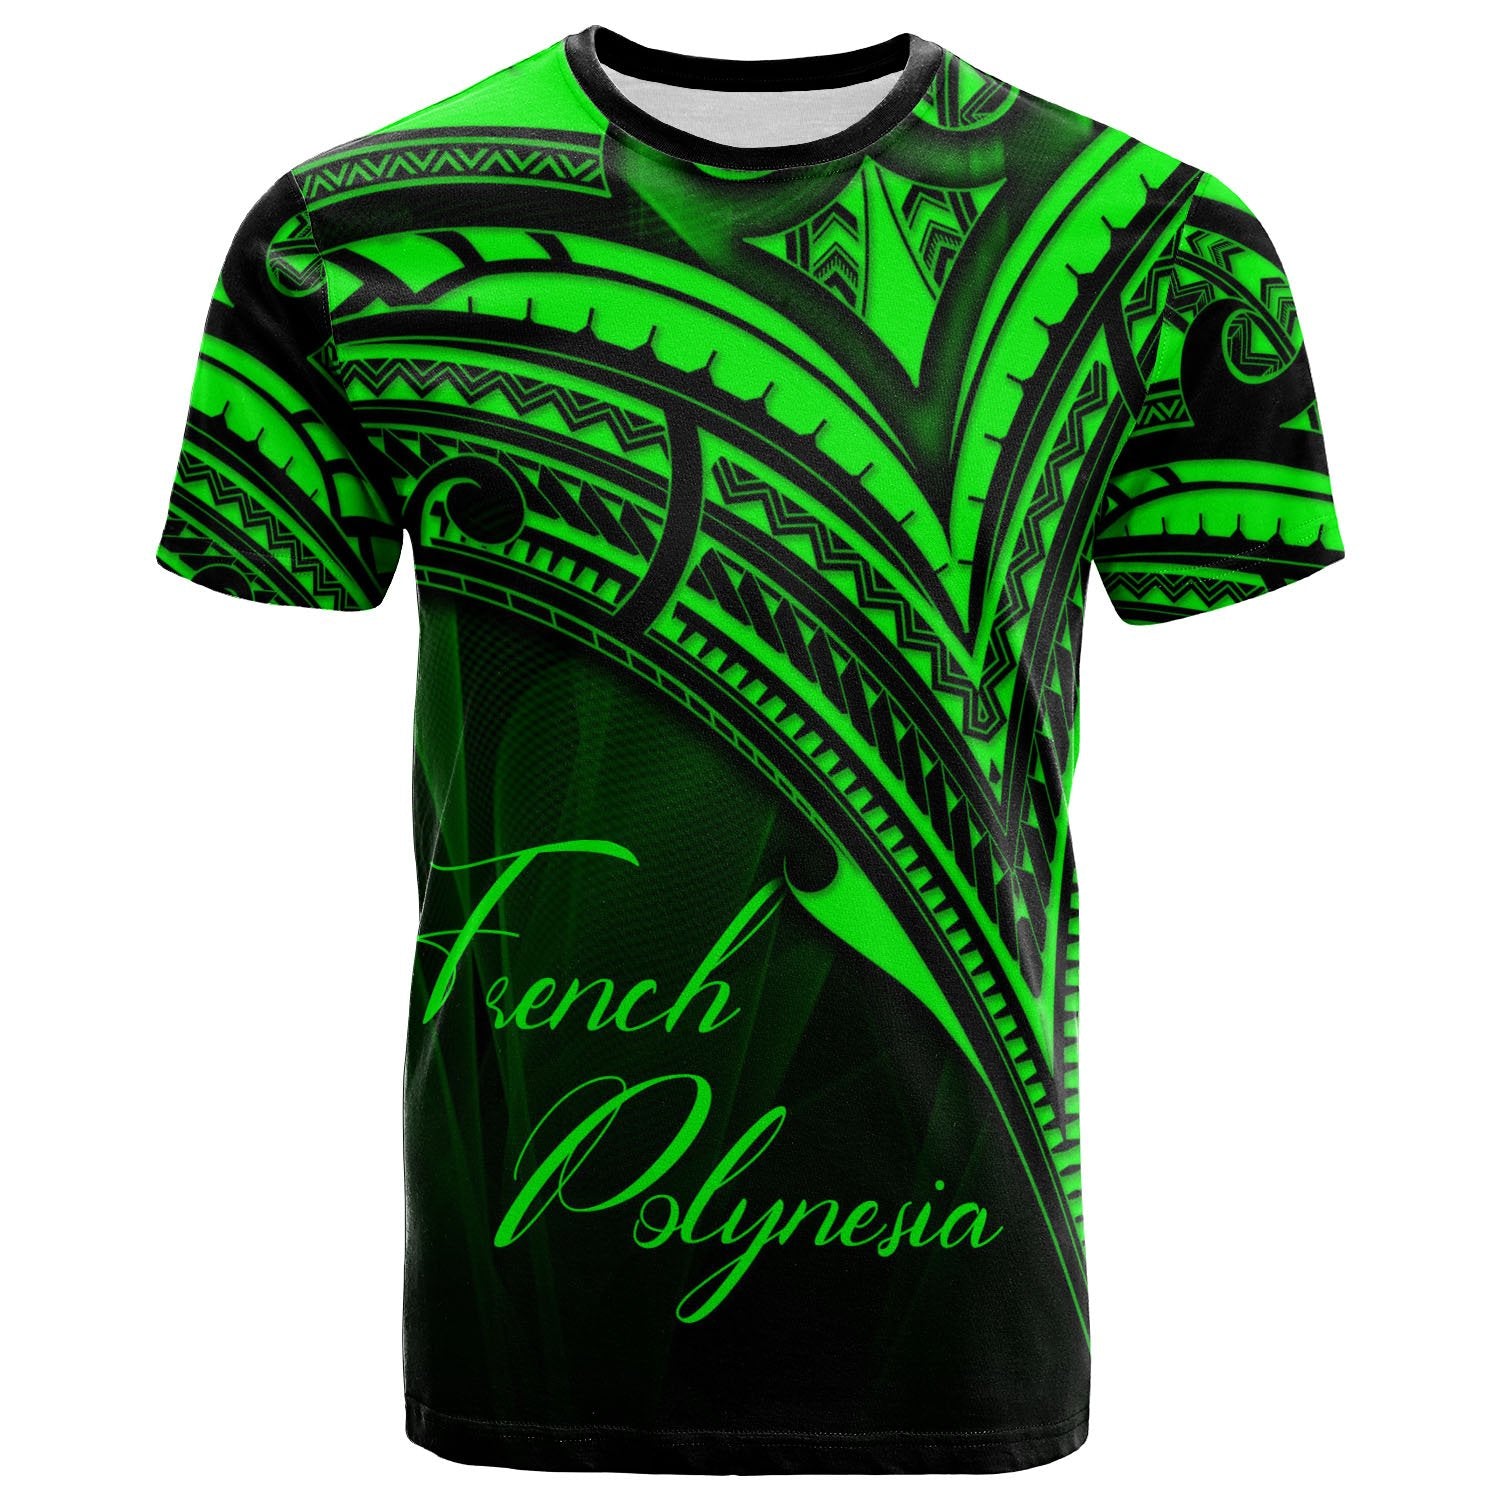 French Polynesia T Shirt Green Color Cross Style Unisex Black - Polynesian Pride